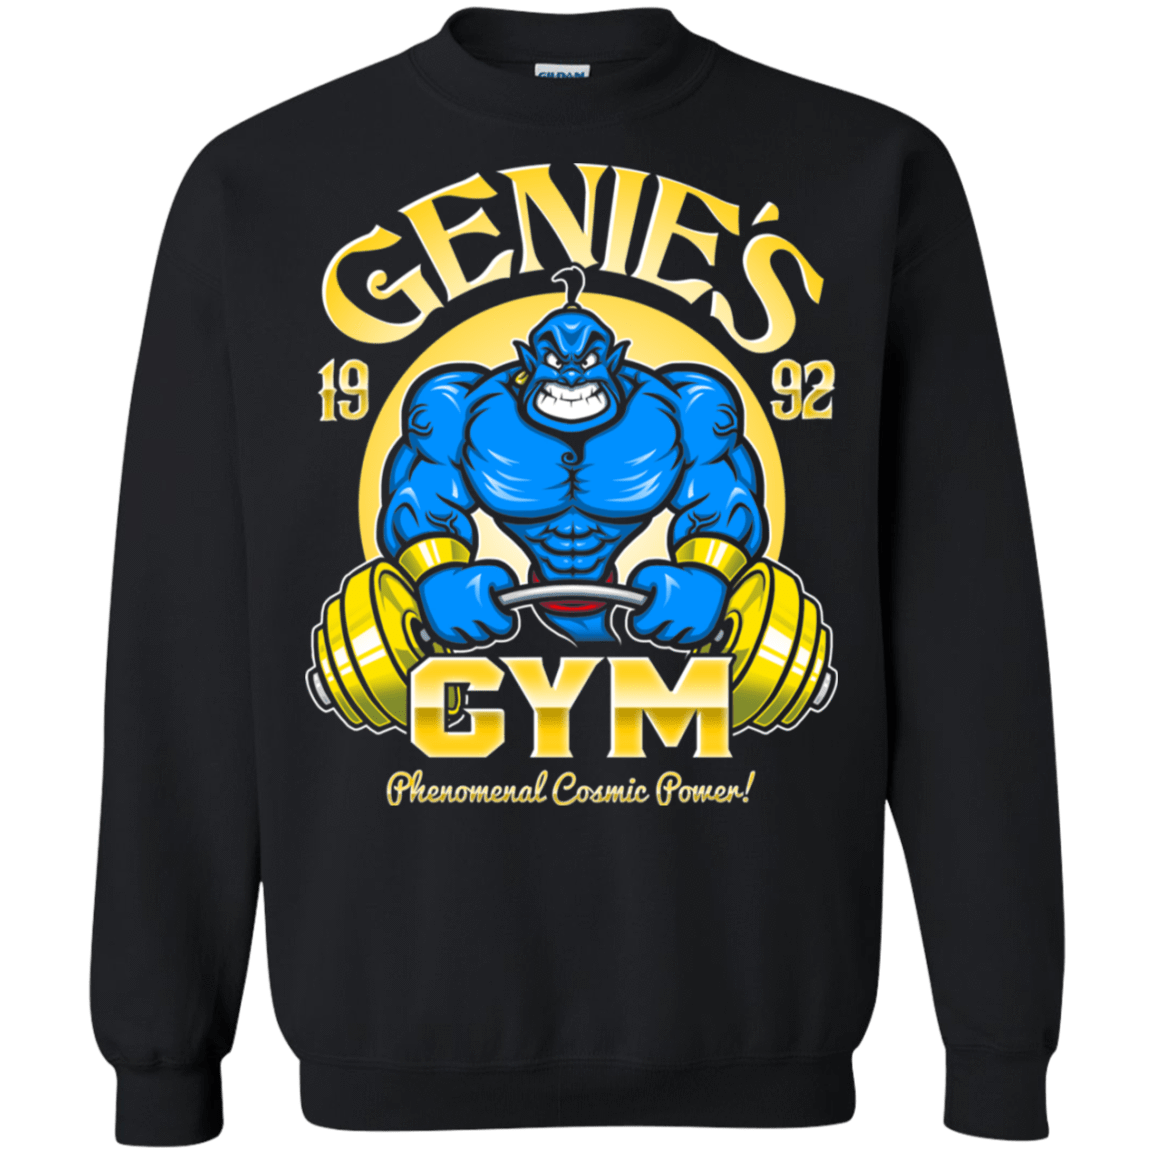 Sweatshirts Black / S Genies Gym Crewneck Sweatshirt